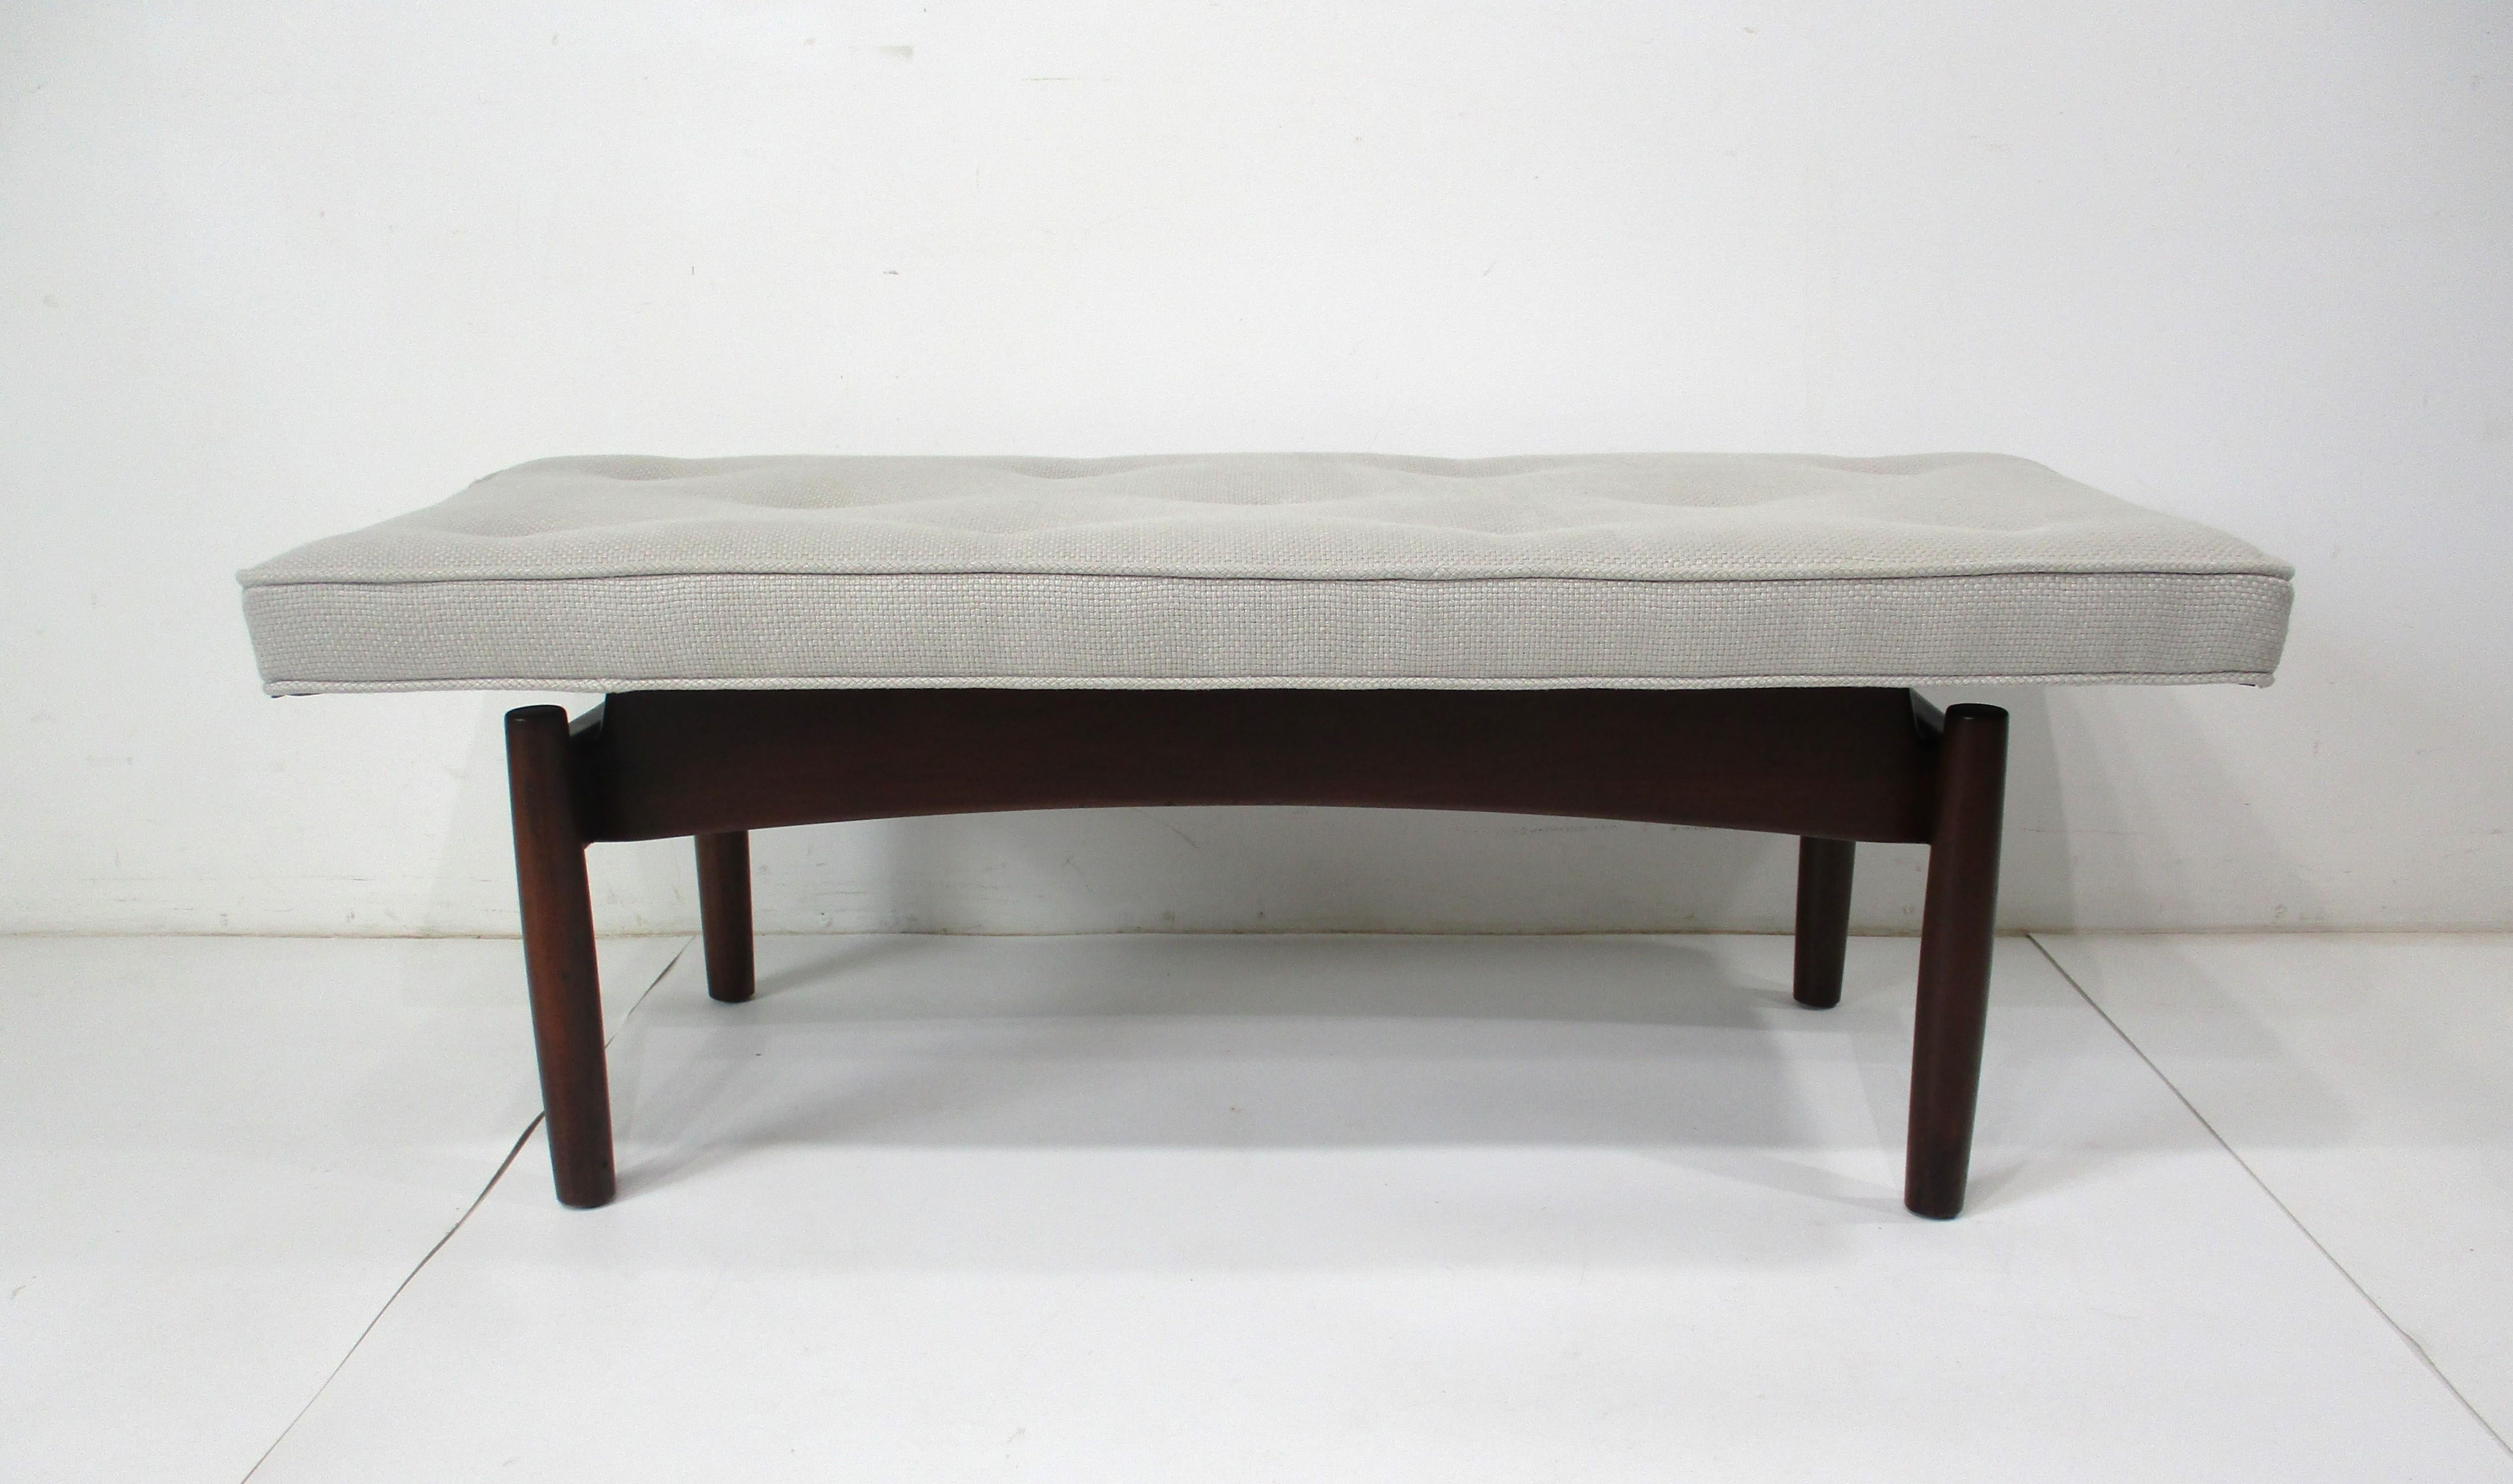 Upholstered Walnut Bench in the Style of Greta Grossman Danish Modern (B) For Sale 4